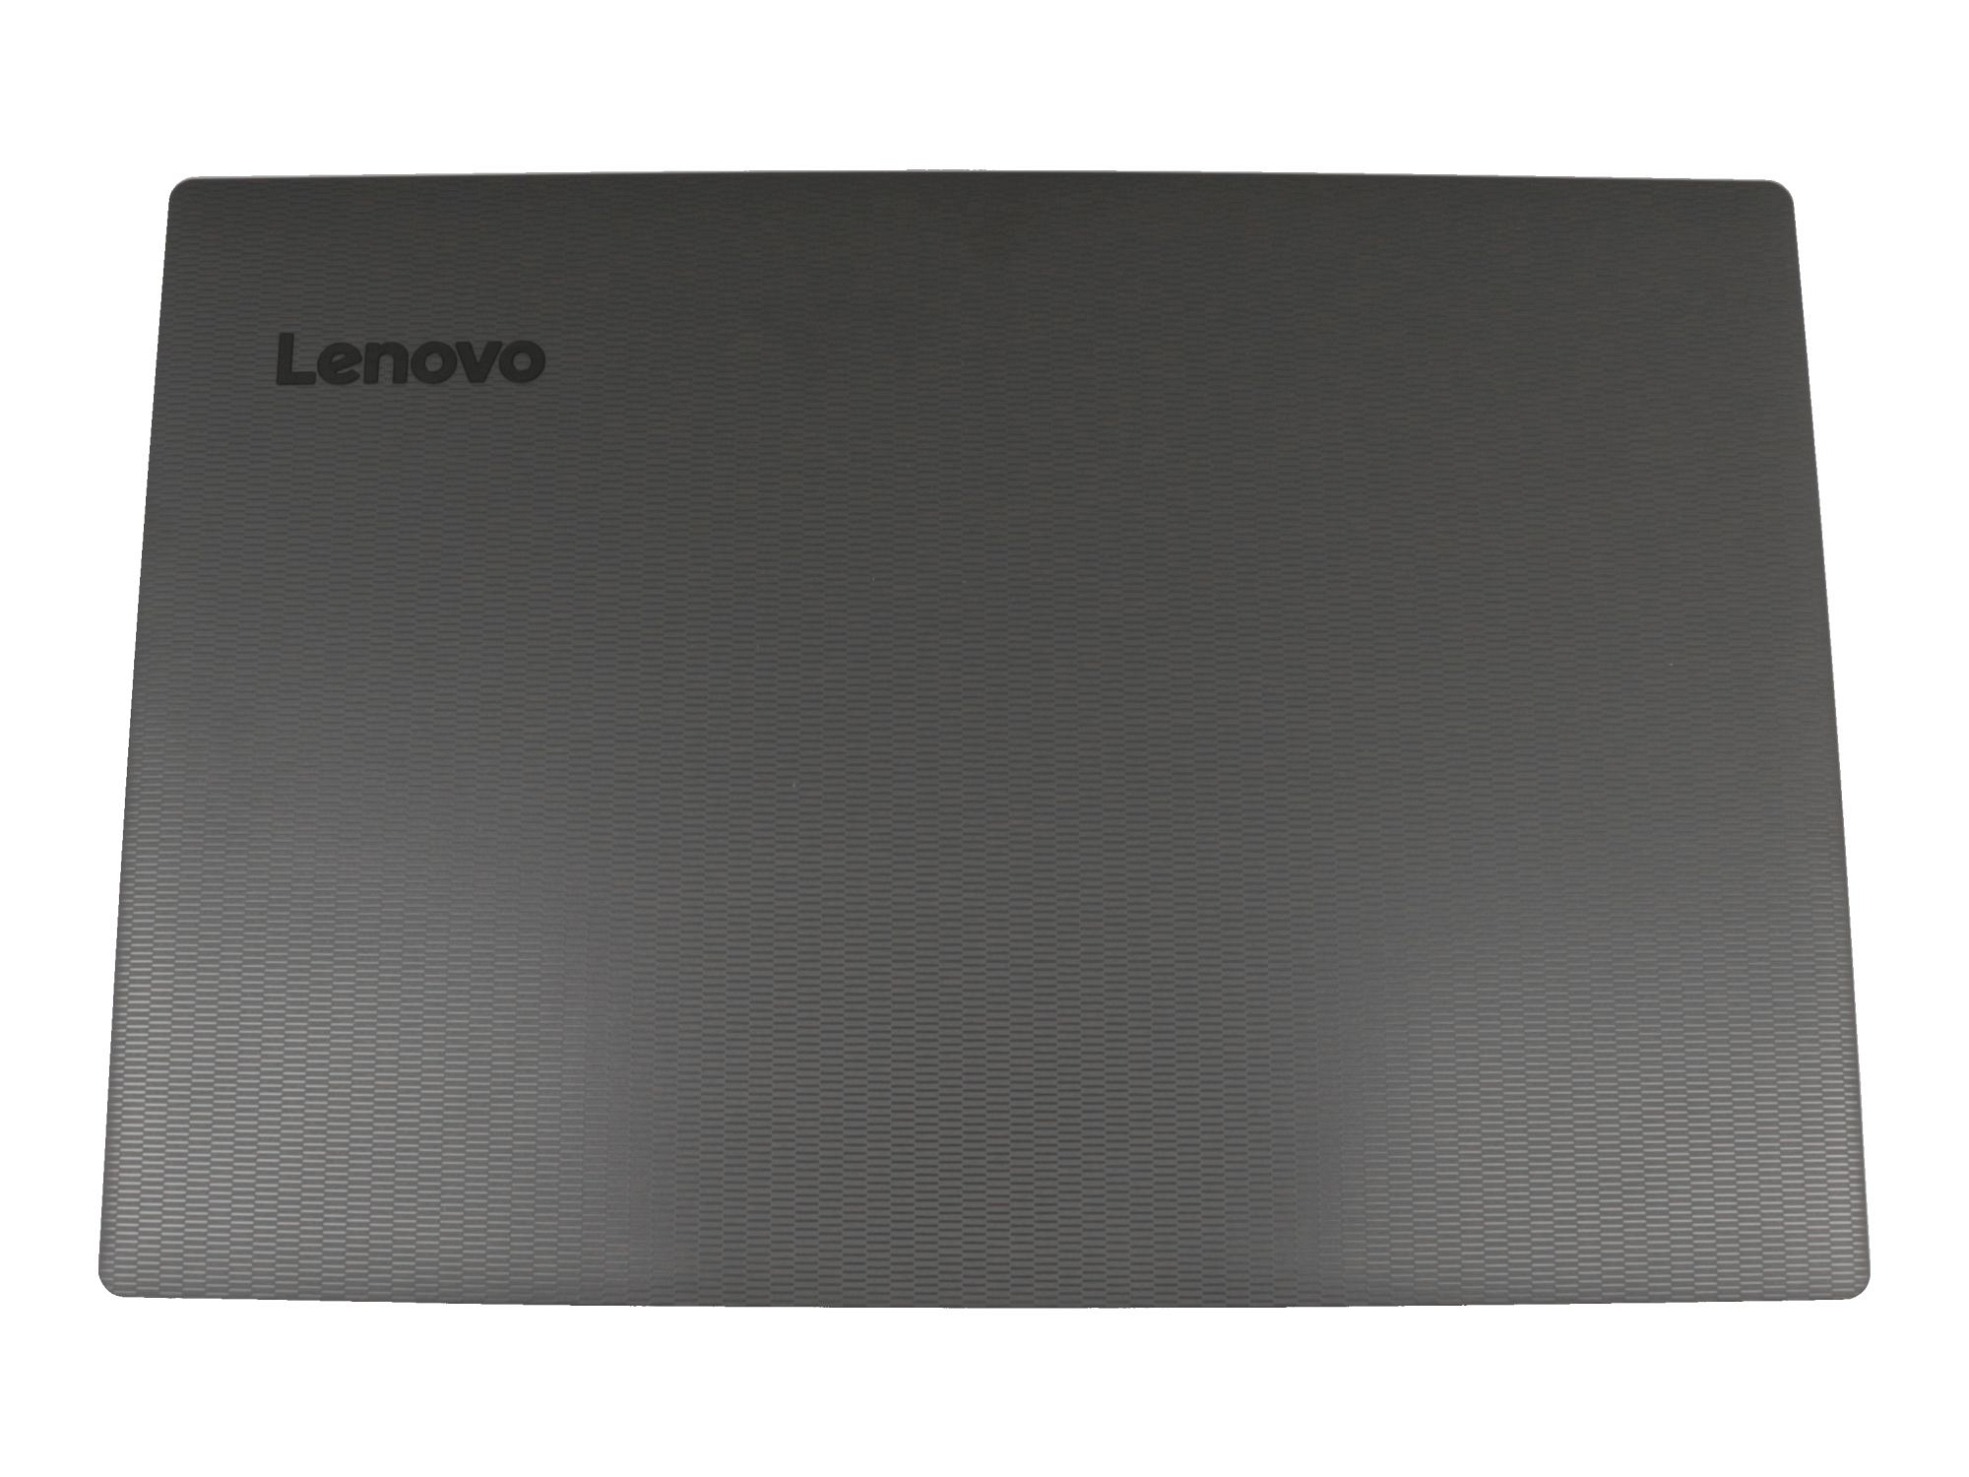 Lenovo 442.0DB14.0002 Displaydeckel 39,6cm (15,6 Zoll) grau